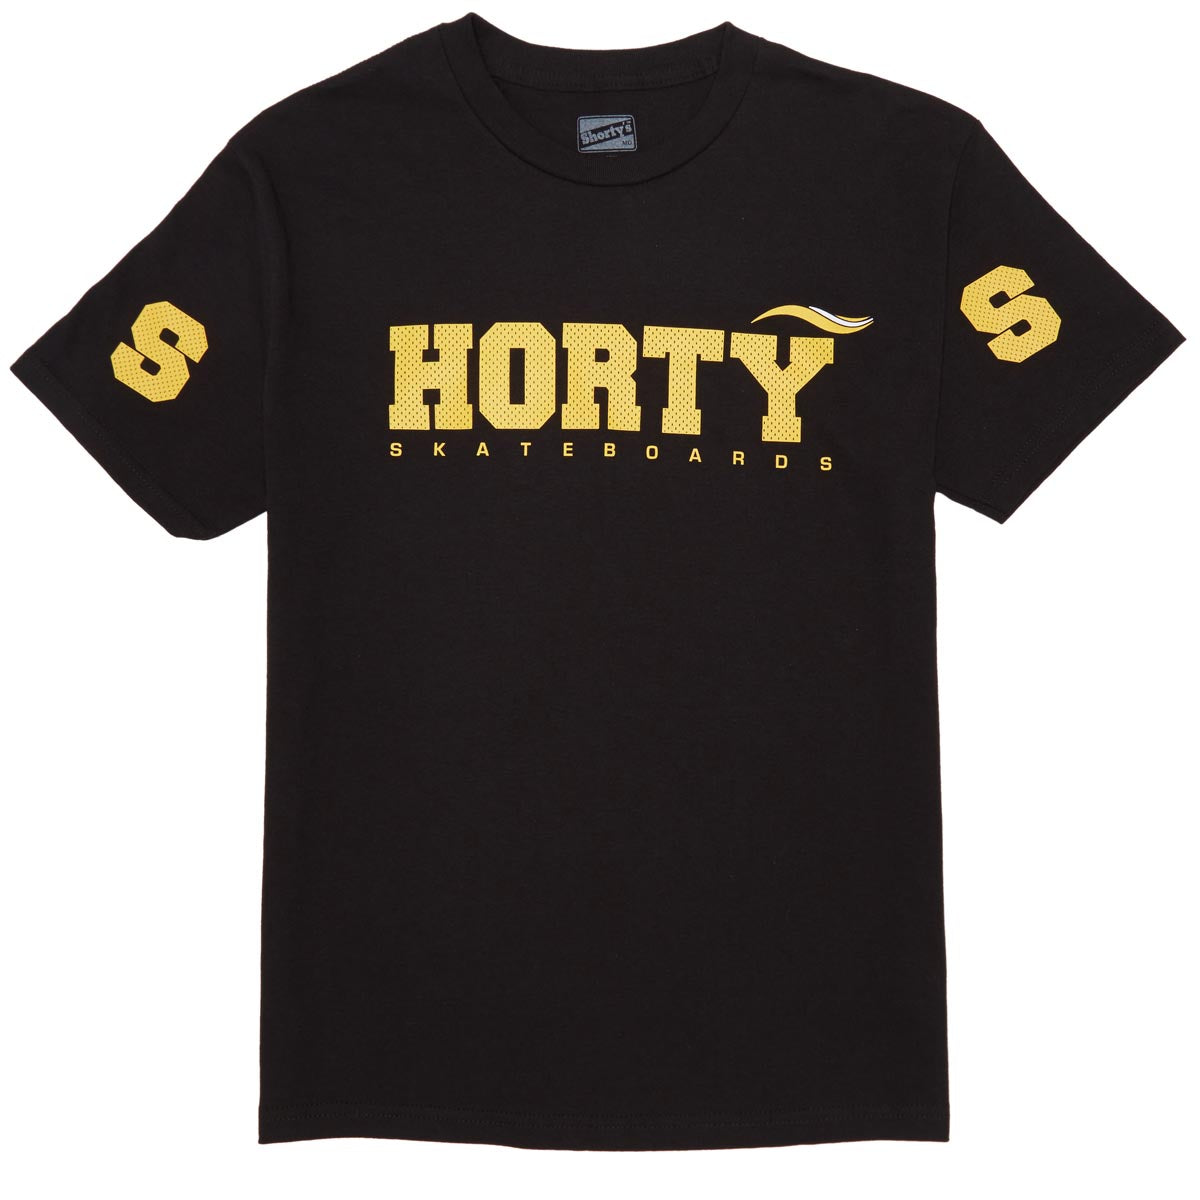 Shorty's S-horty-S Mesh T-Shirt - Black image 1